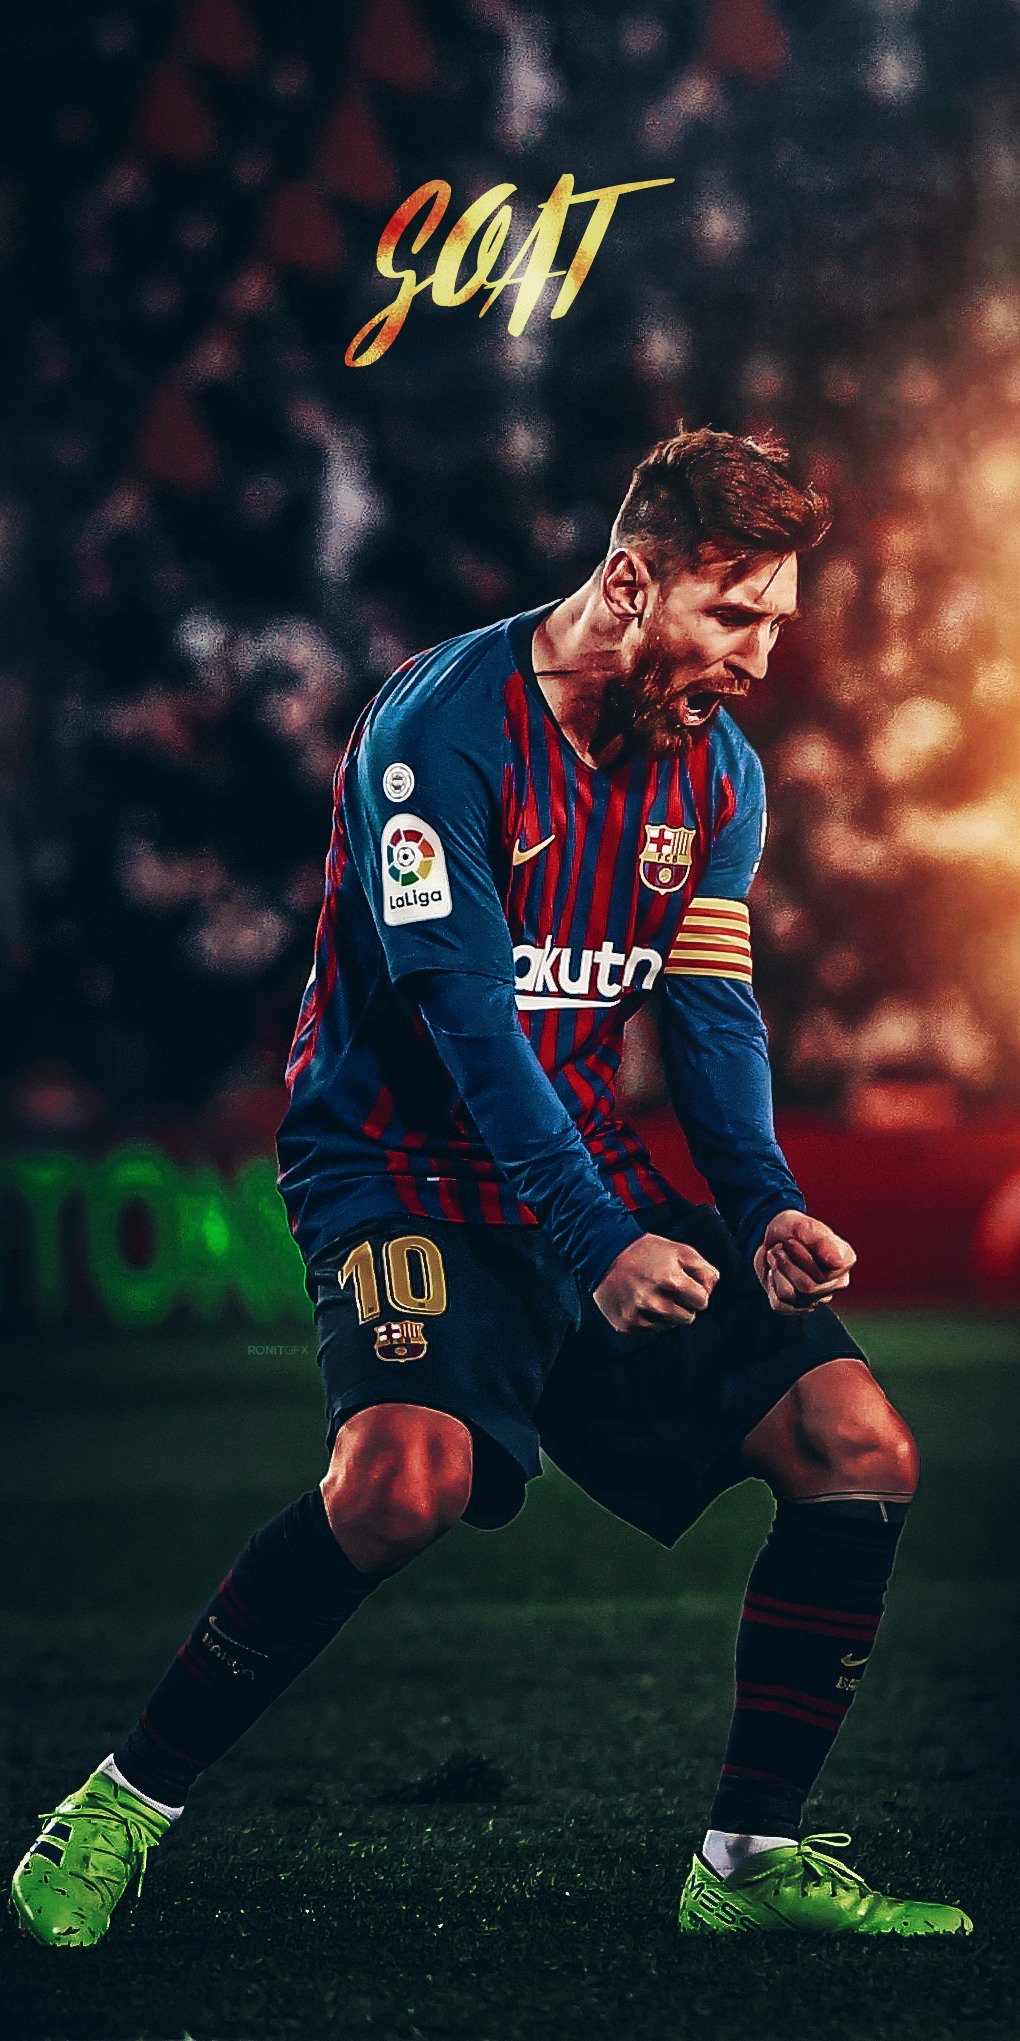 Barça Universal Messi goat wallpaper